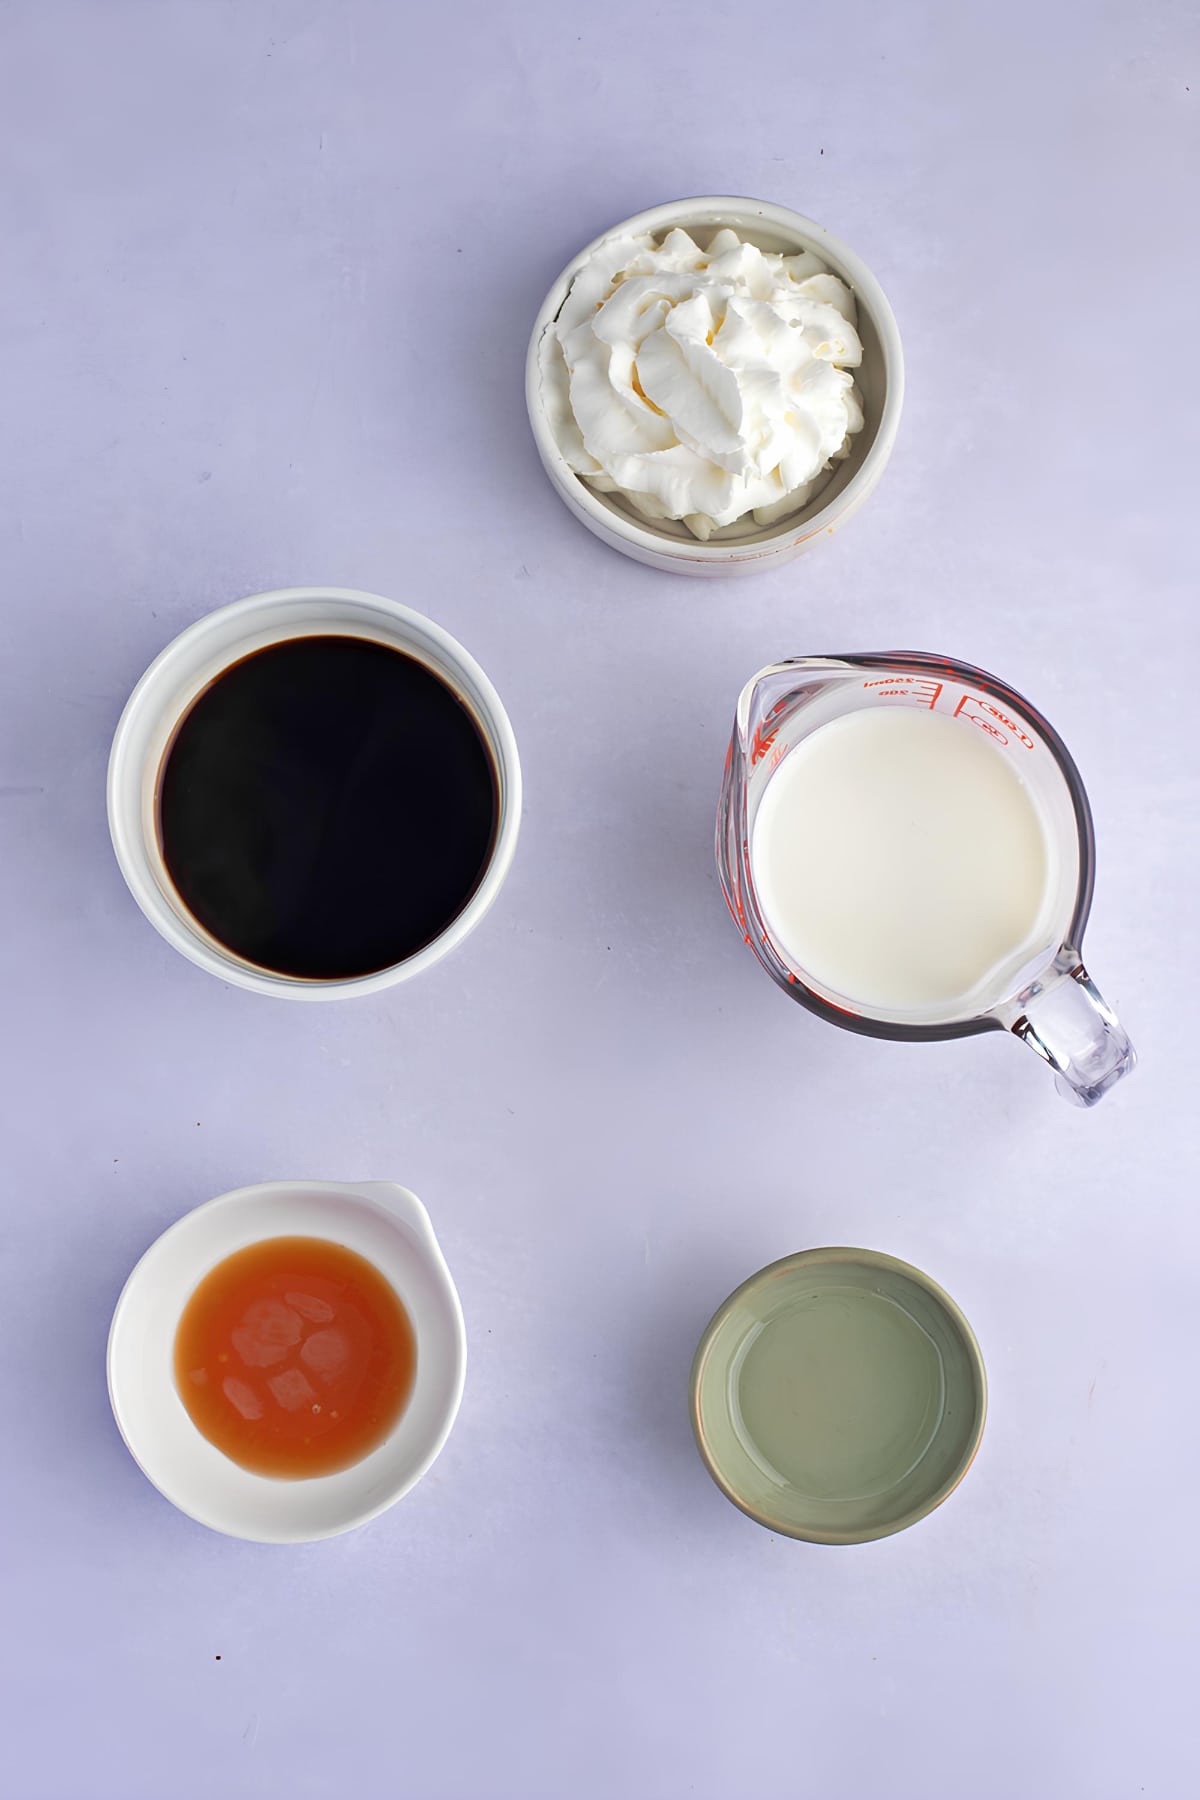 Starbucks Caramel Macchiato ingredients: espresso, milk, caramel syrup and whipped cream. 